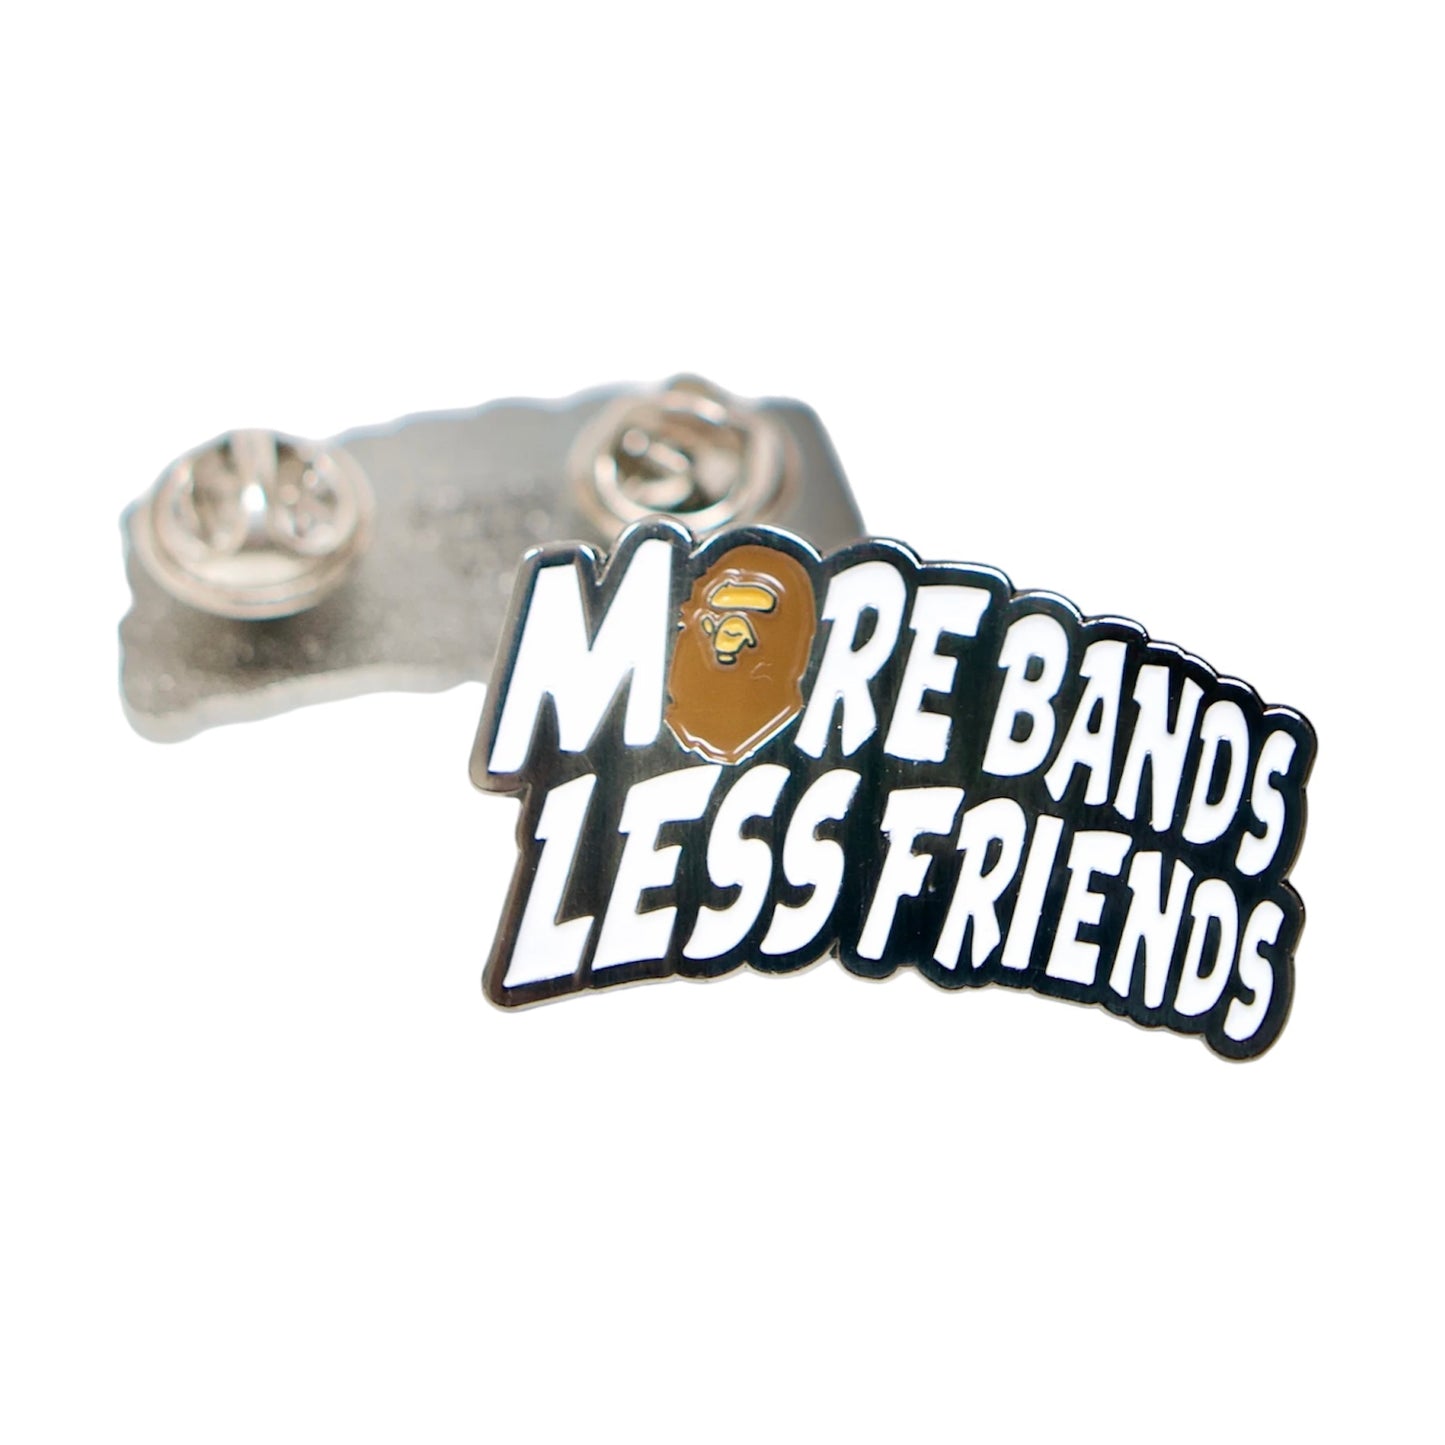 “Ape More Bands Less Friends” Enamel Pin